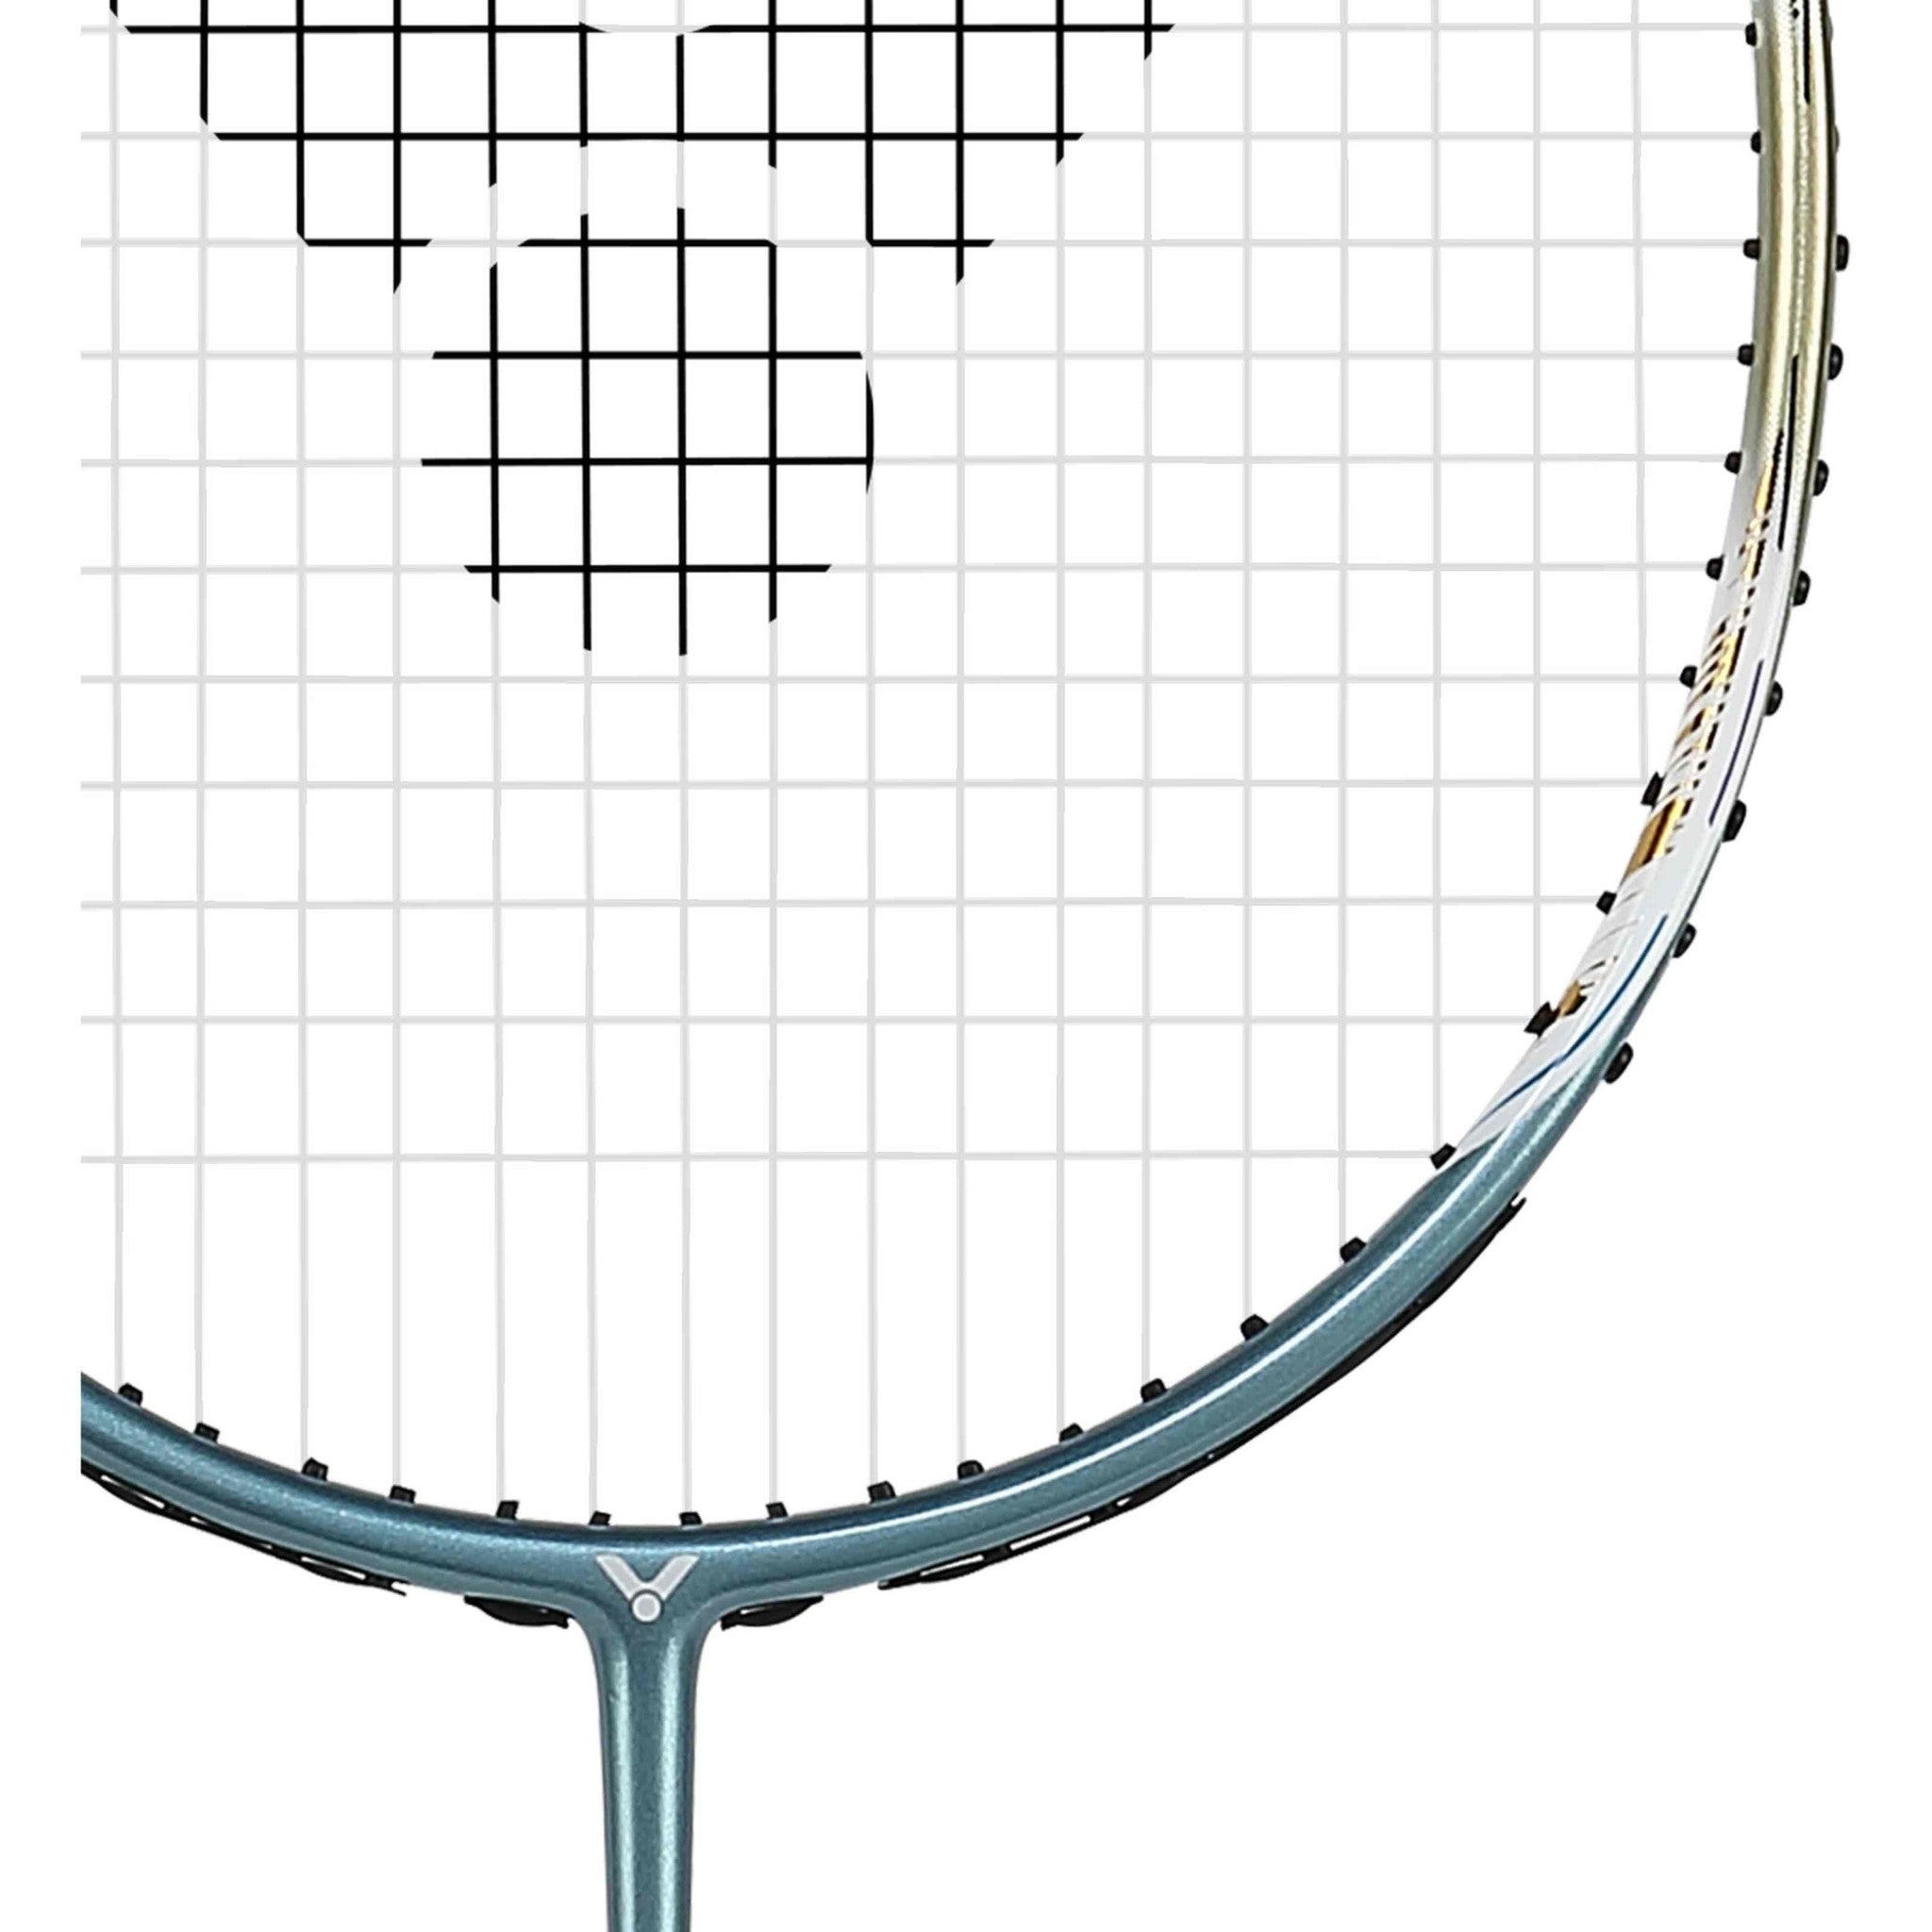 Victor DriveX Nano 7 V Badminton Racket- Frame Only